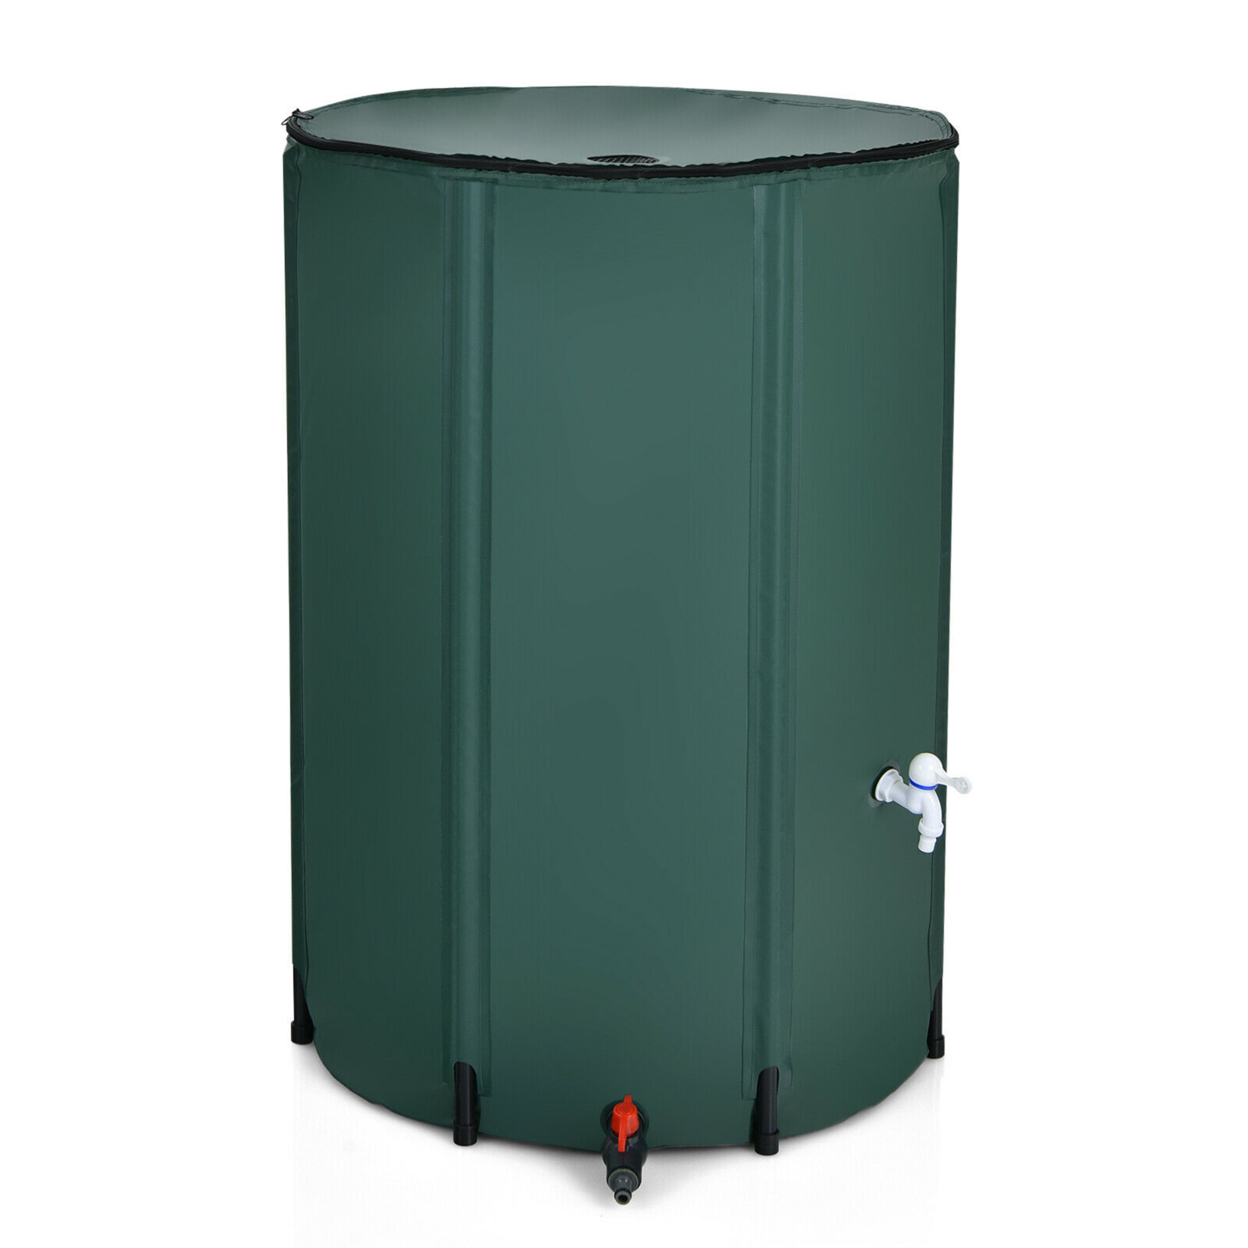 100 Gallon Portable Rain Barrel Water Collector CollapsibleTank W /Spigot Filter